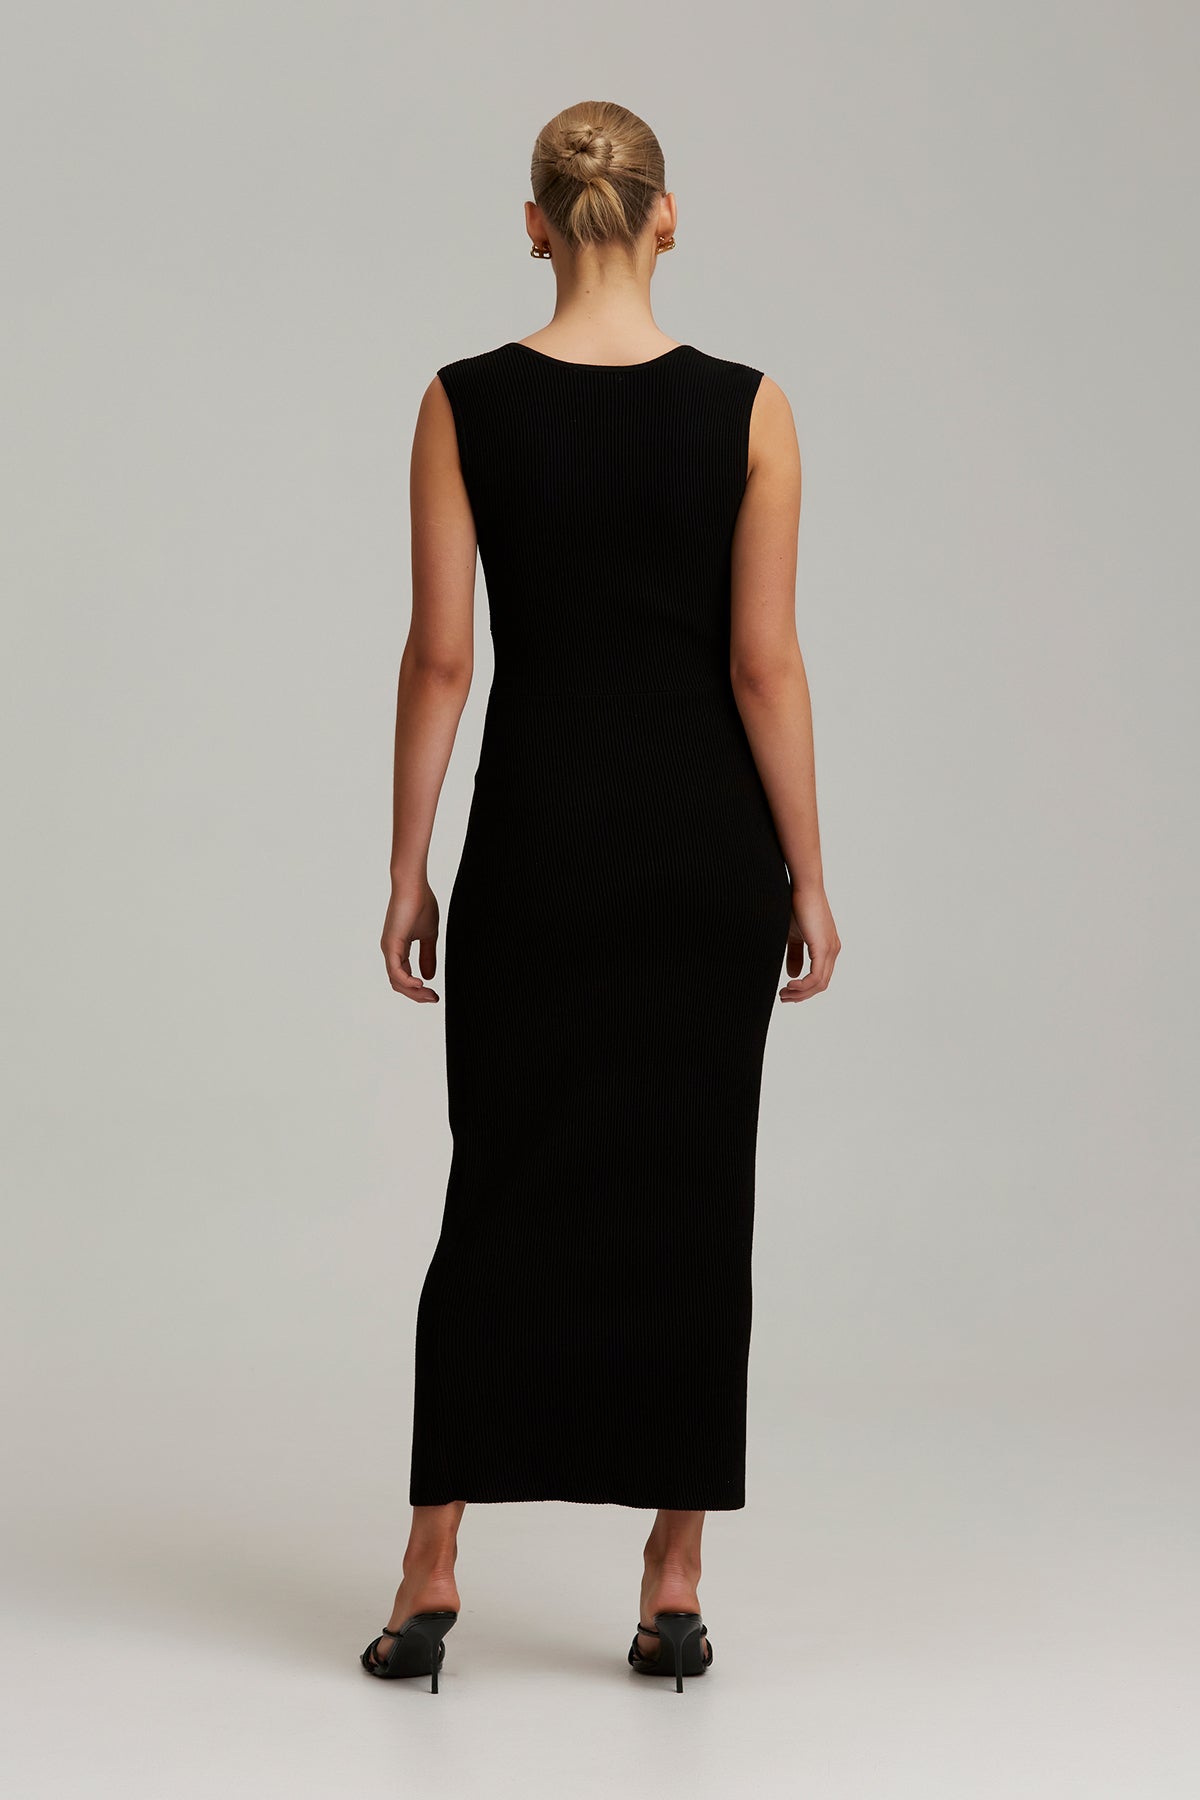 C/MEO Collective - Element Knit Dress - Black